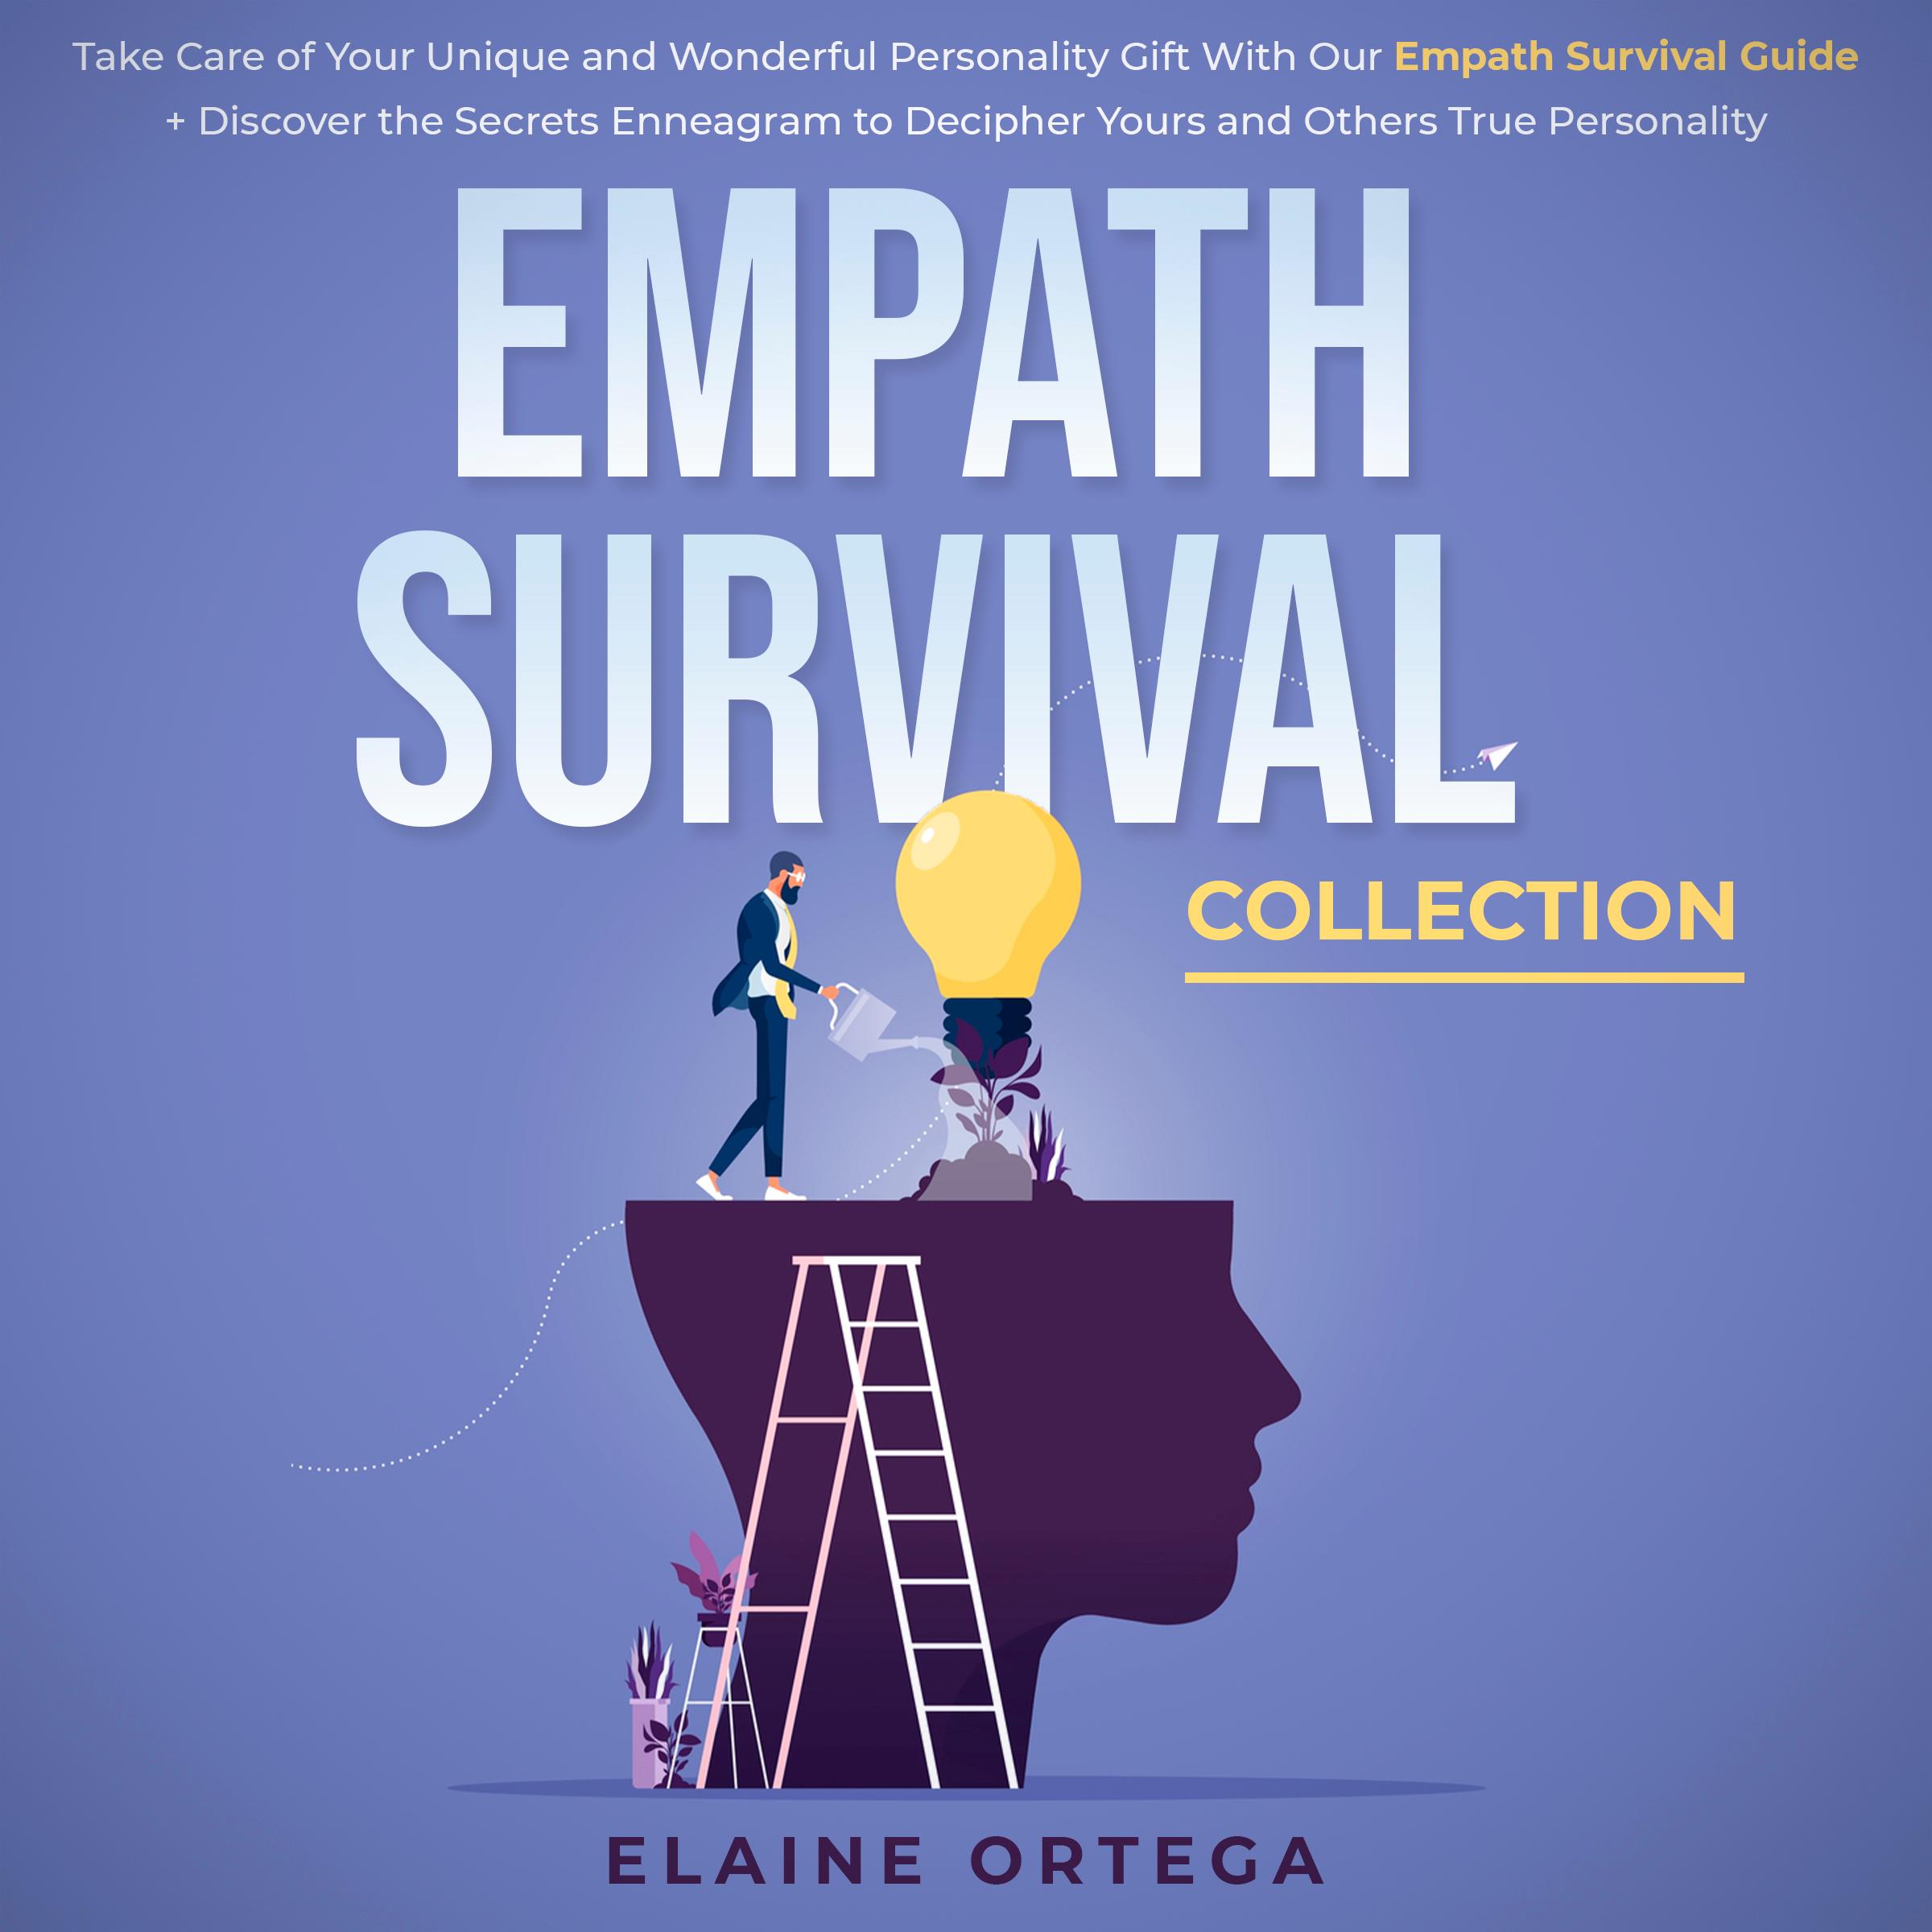 Empath Survival Collection